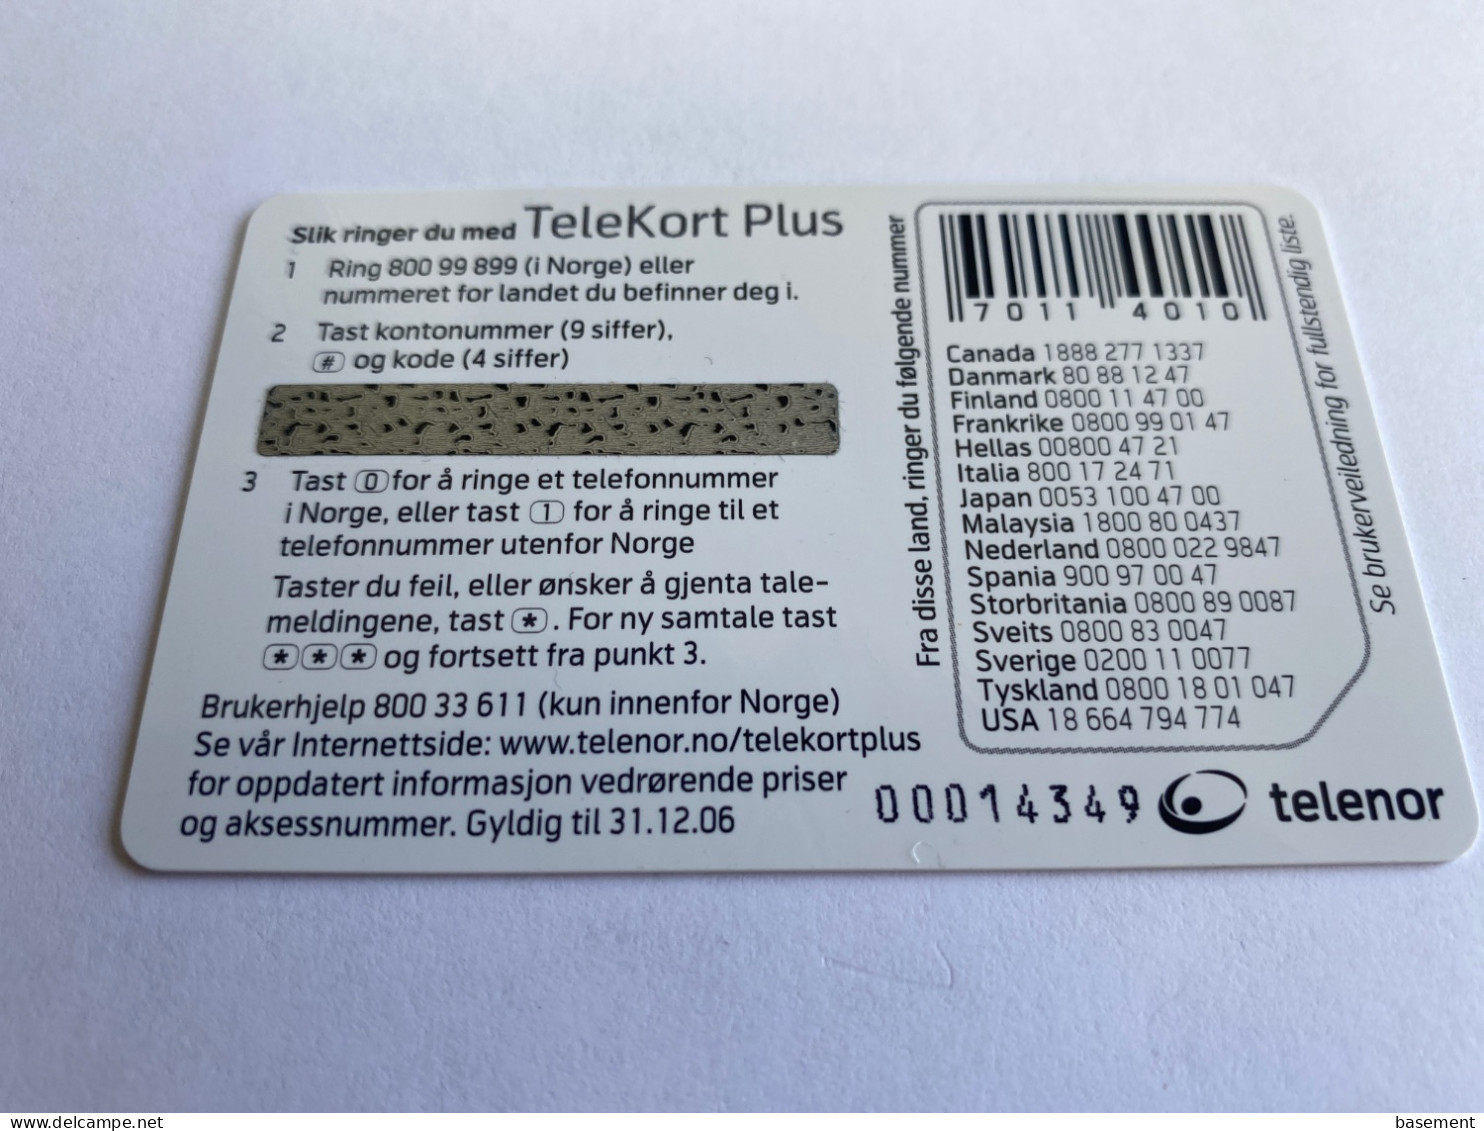 1:004 - Norway Telenor NTK 15 Year - Norvège